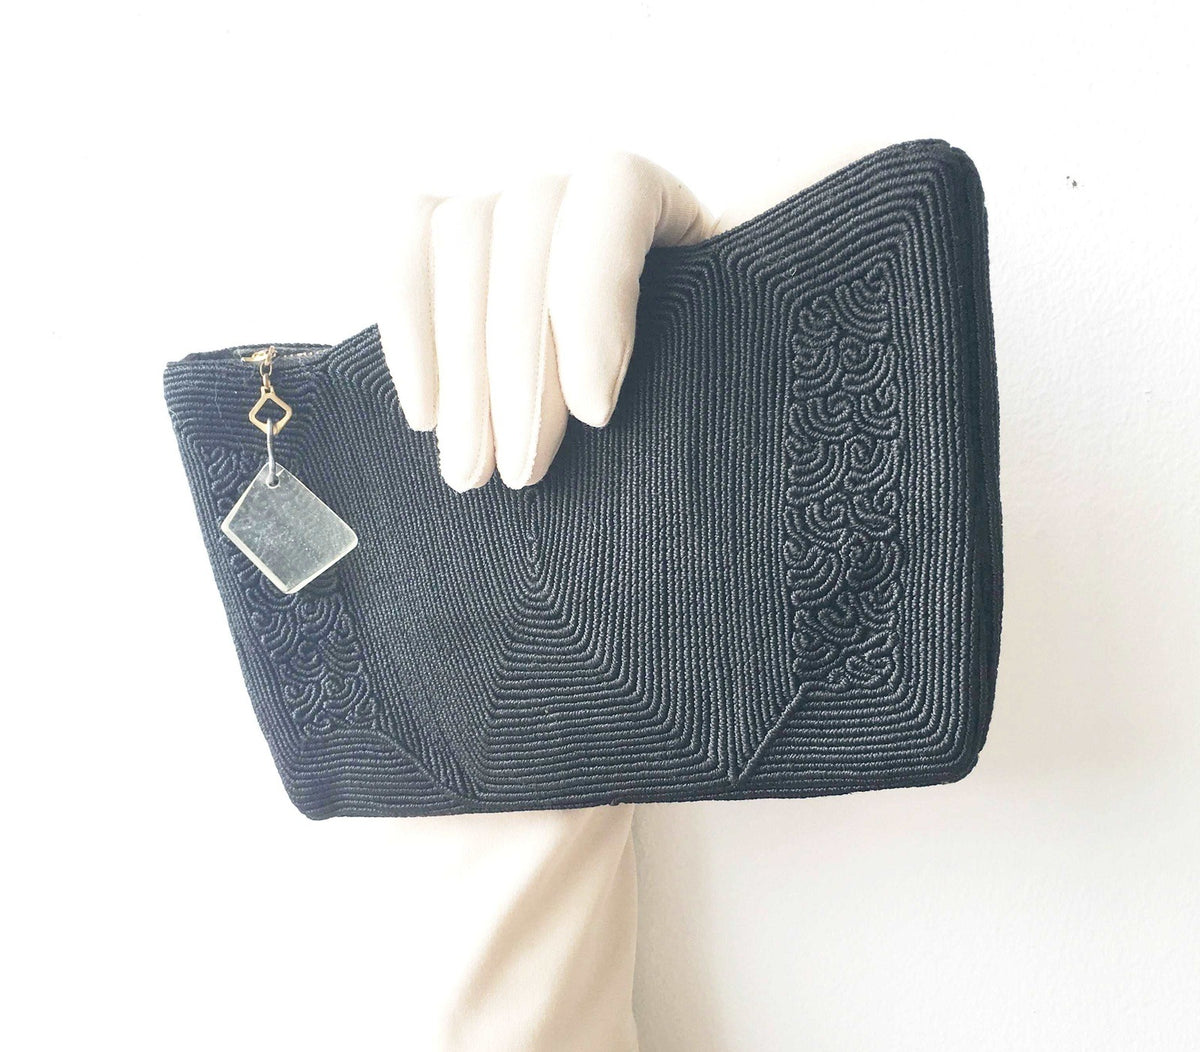 Black Yarn Coil Clutch Bag Vintage Accessories